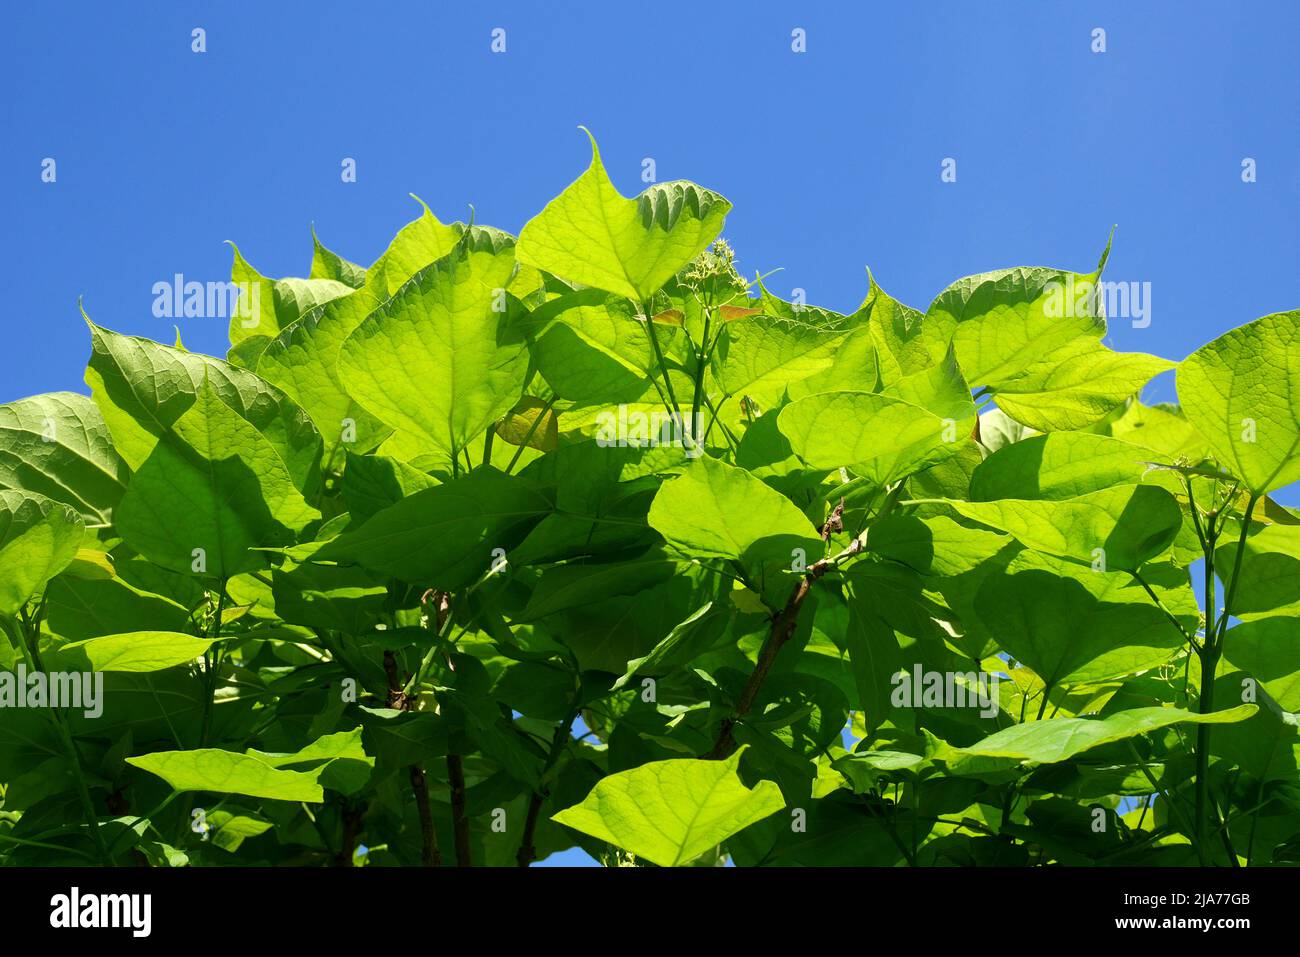 Catalpa or cigar tree leaves against a blue sky, Szigethalom, Hungary Stock Photo